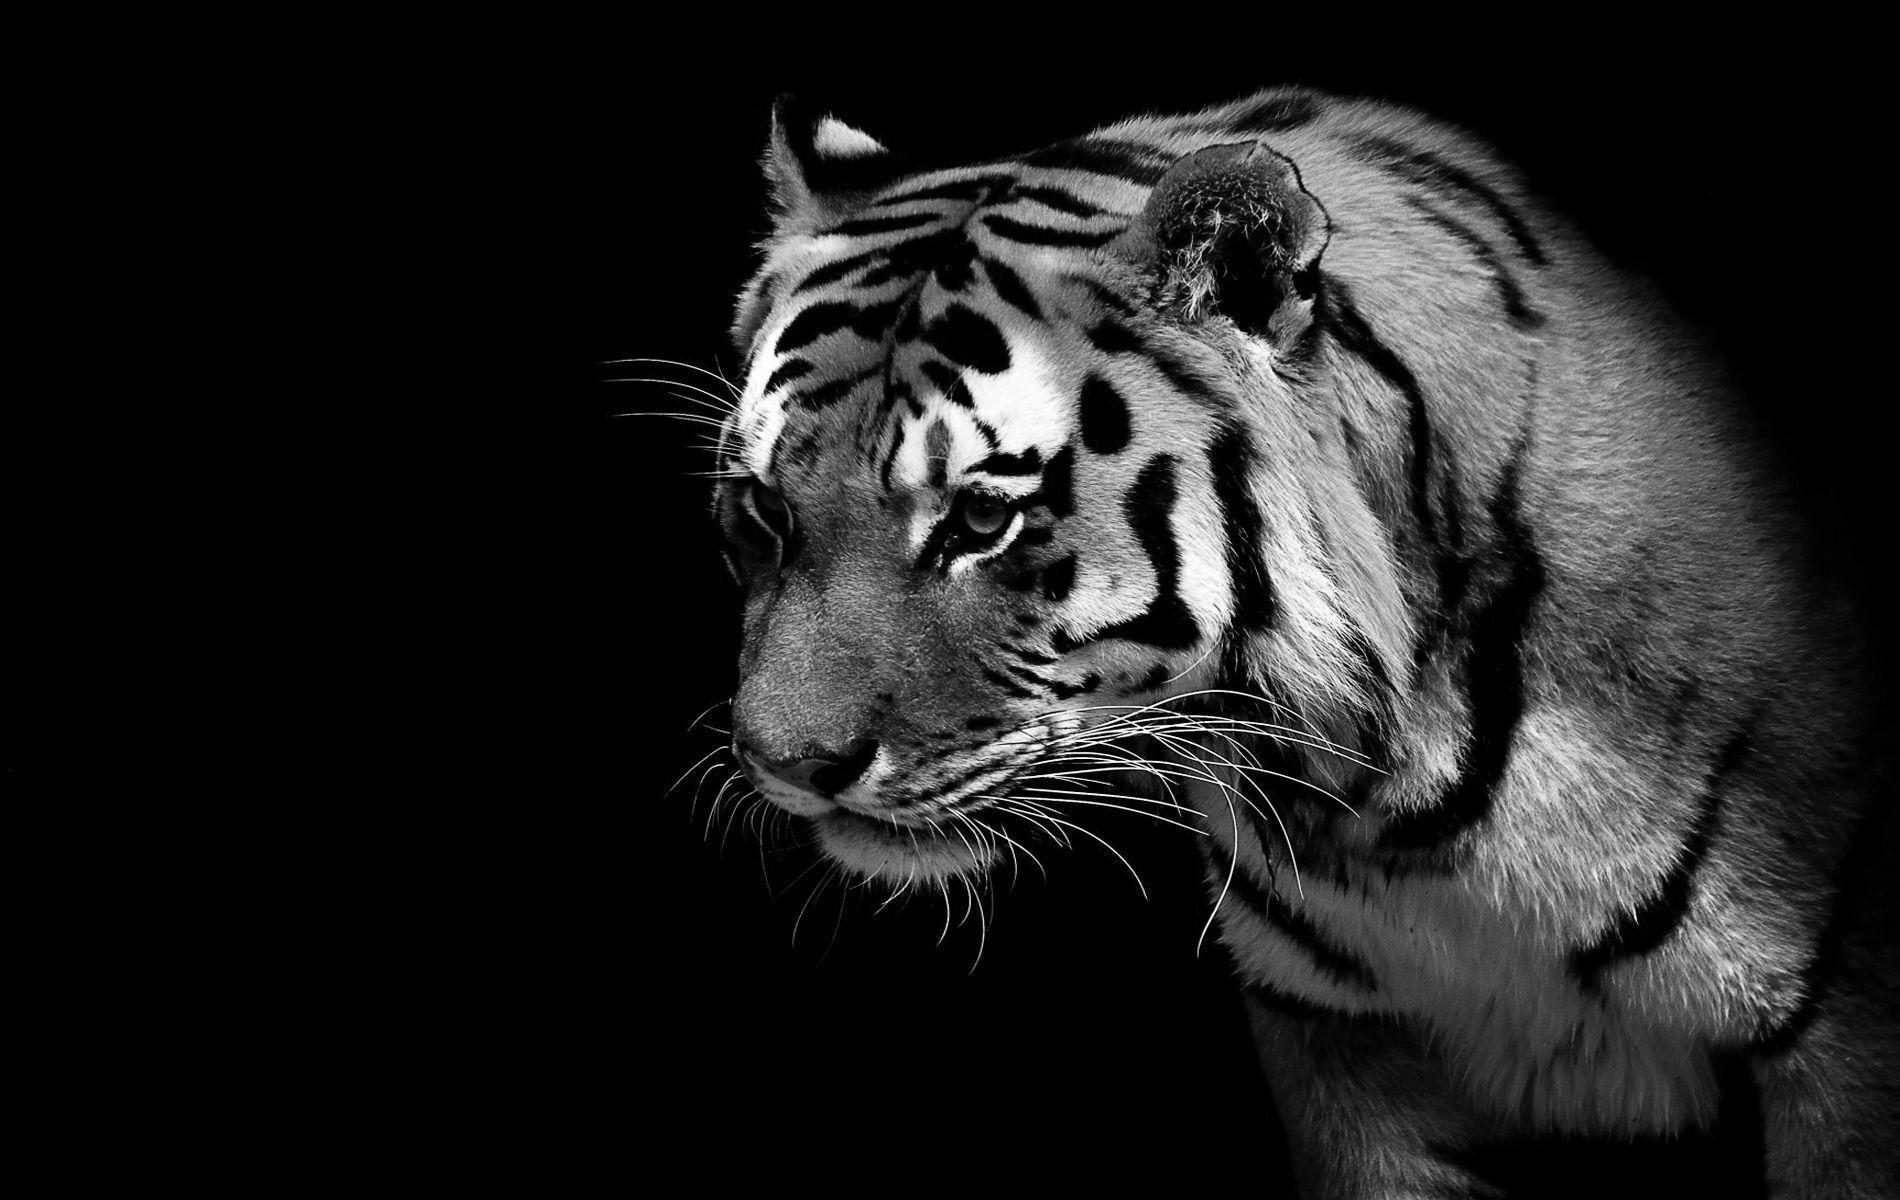 Black Tiger Wallpapers, Fantastic HDQ Black Tiger Image